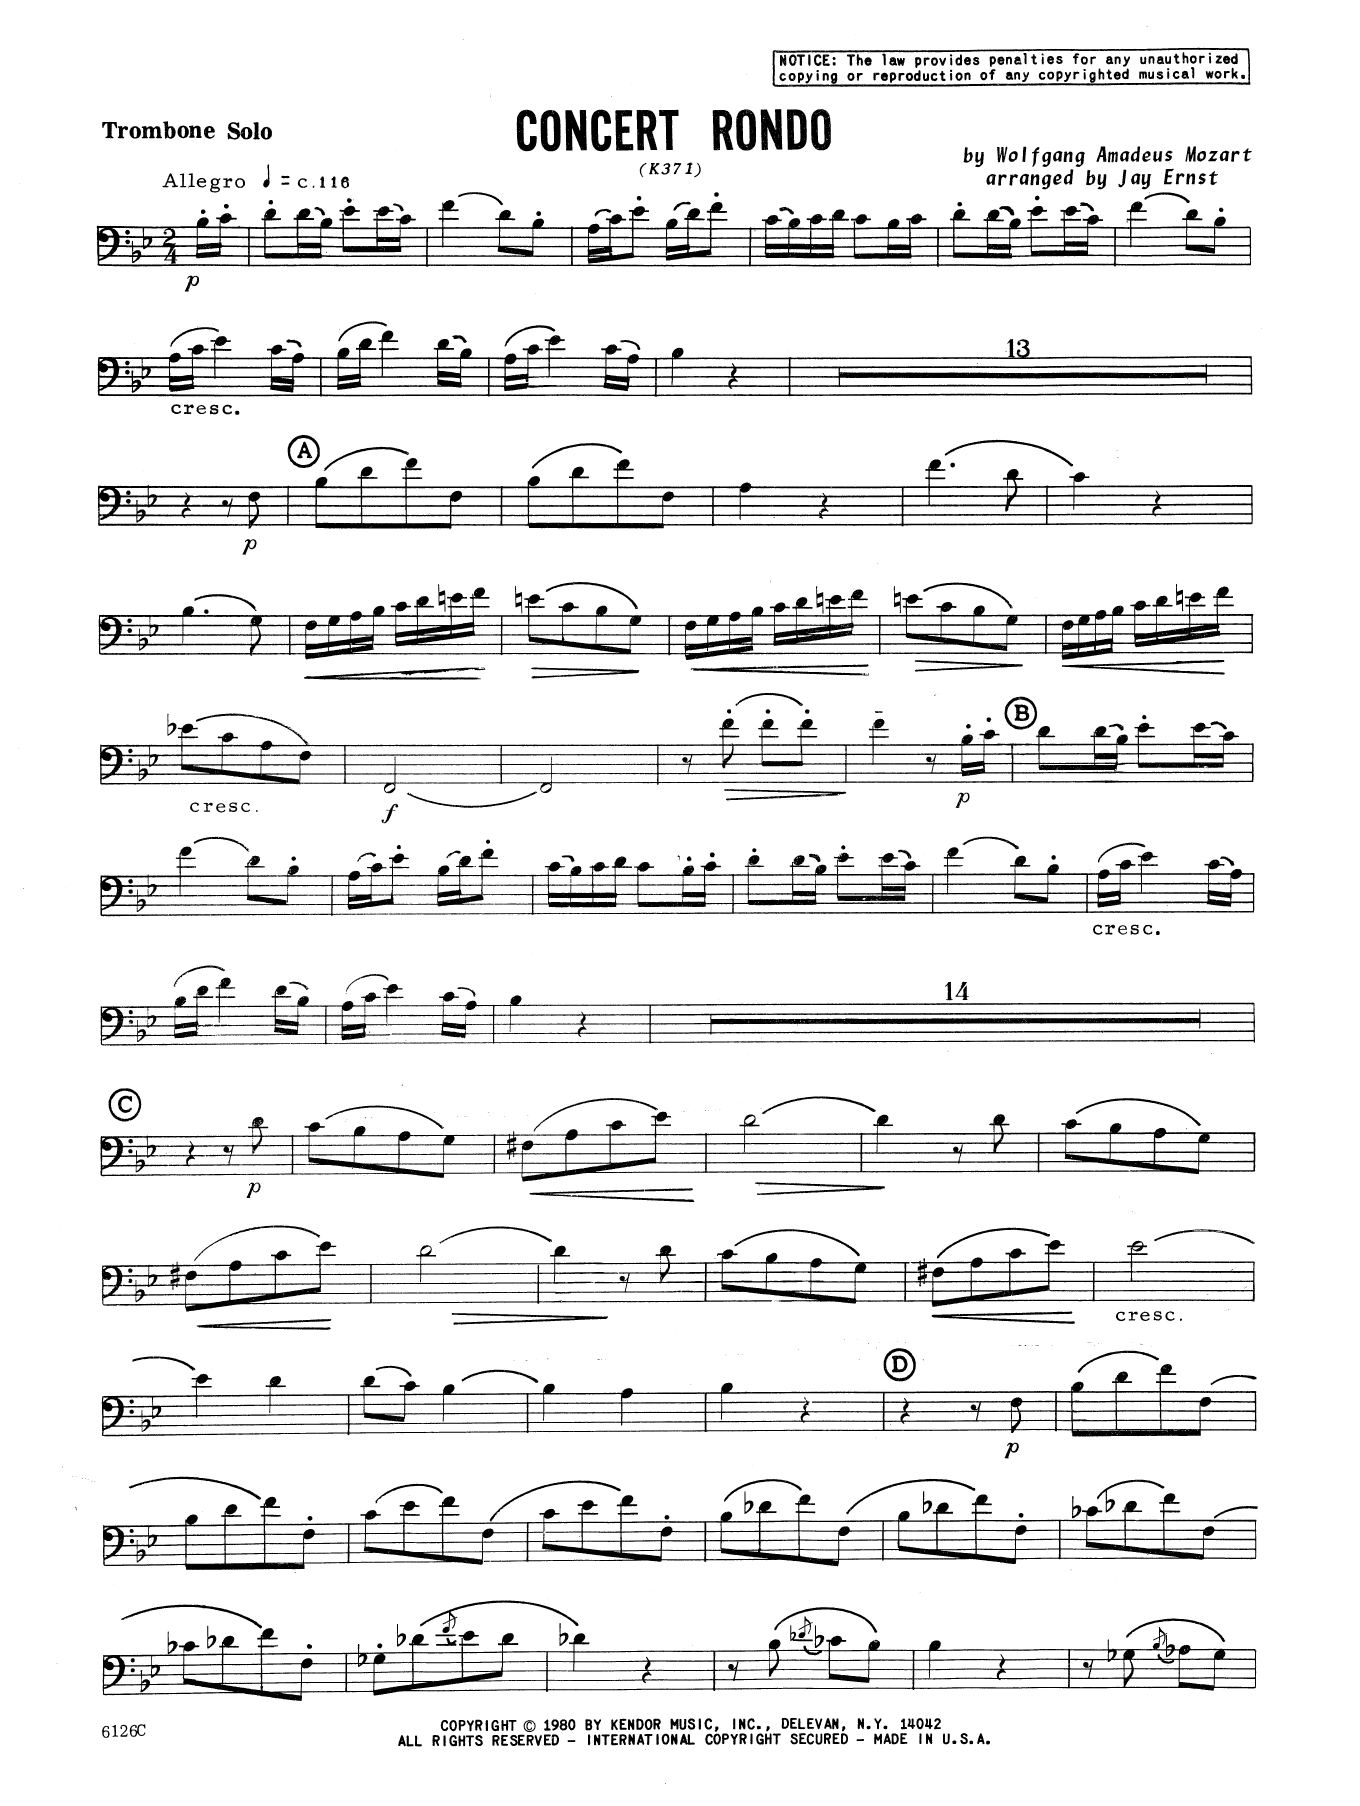 Download Ernst Concert Rondo (K371) - Trombone Sheet Music